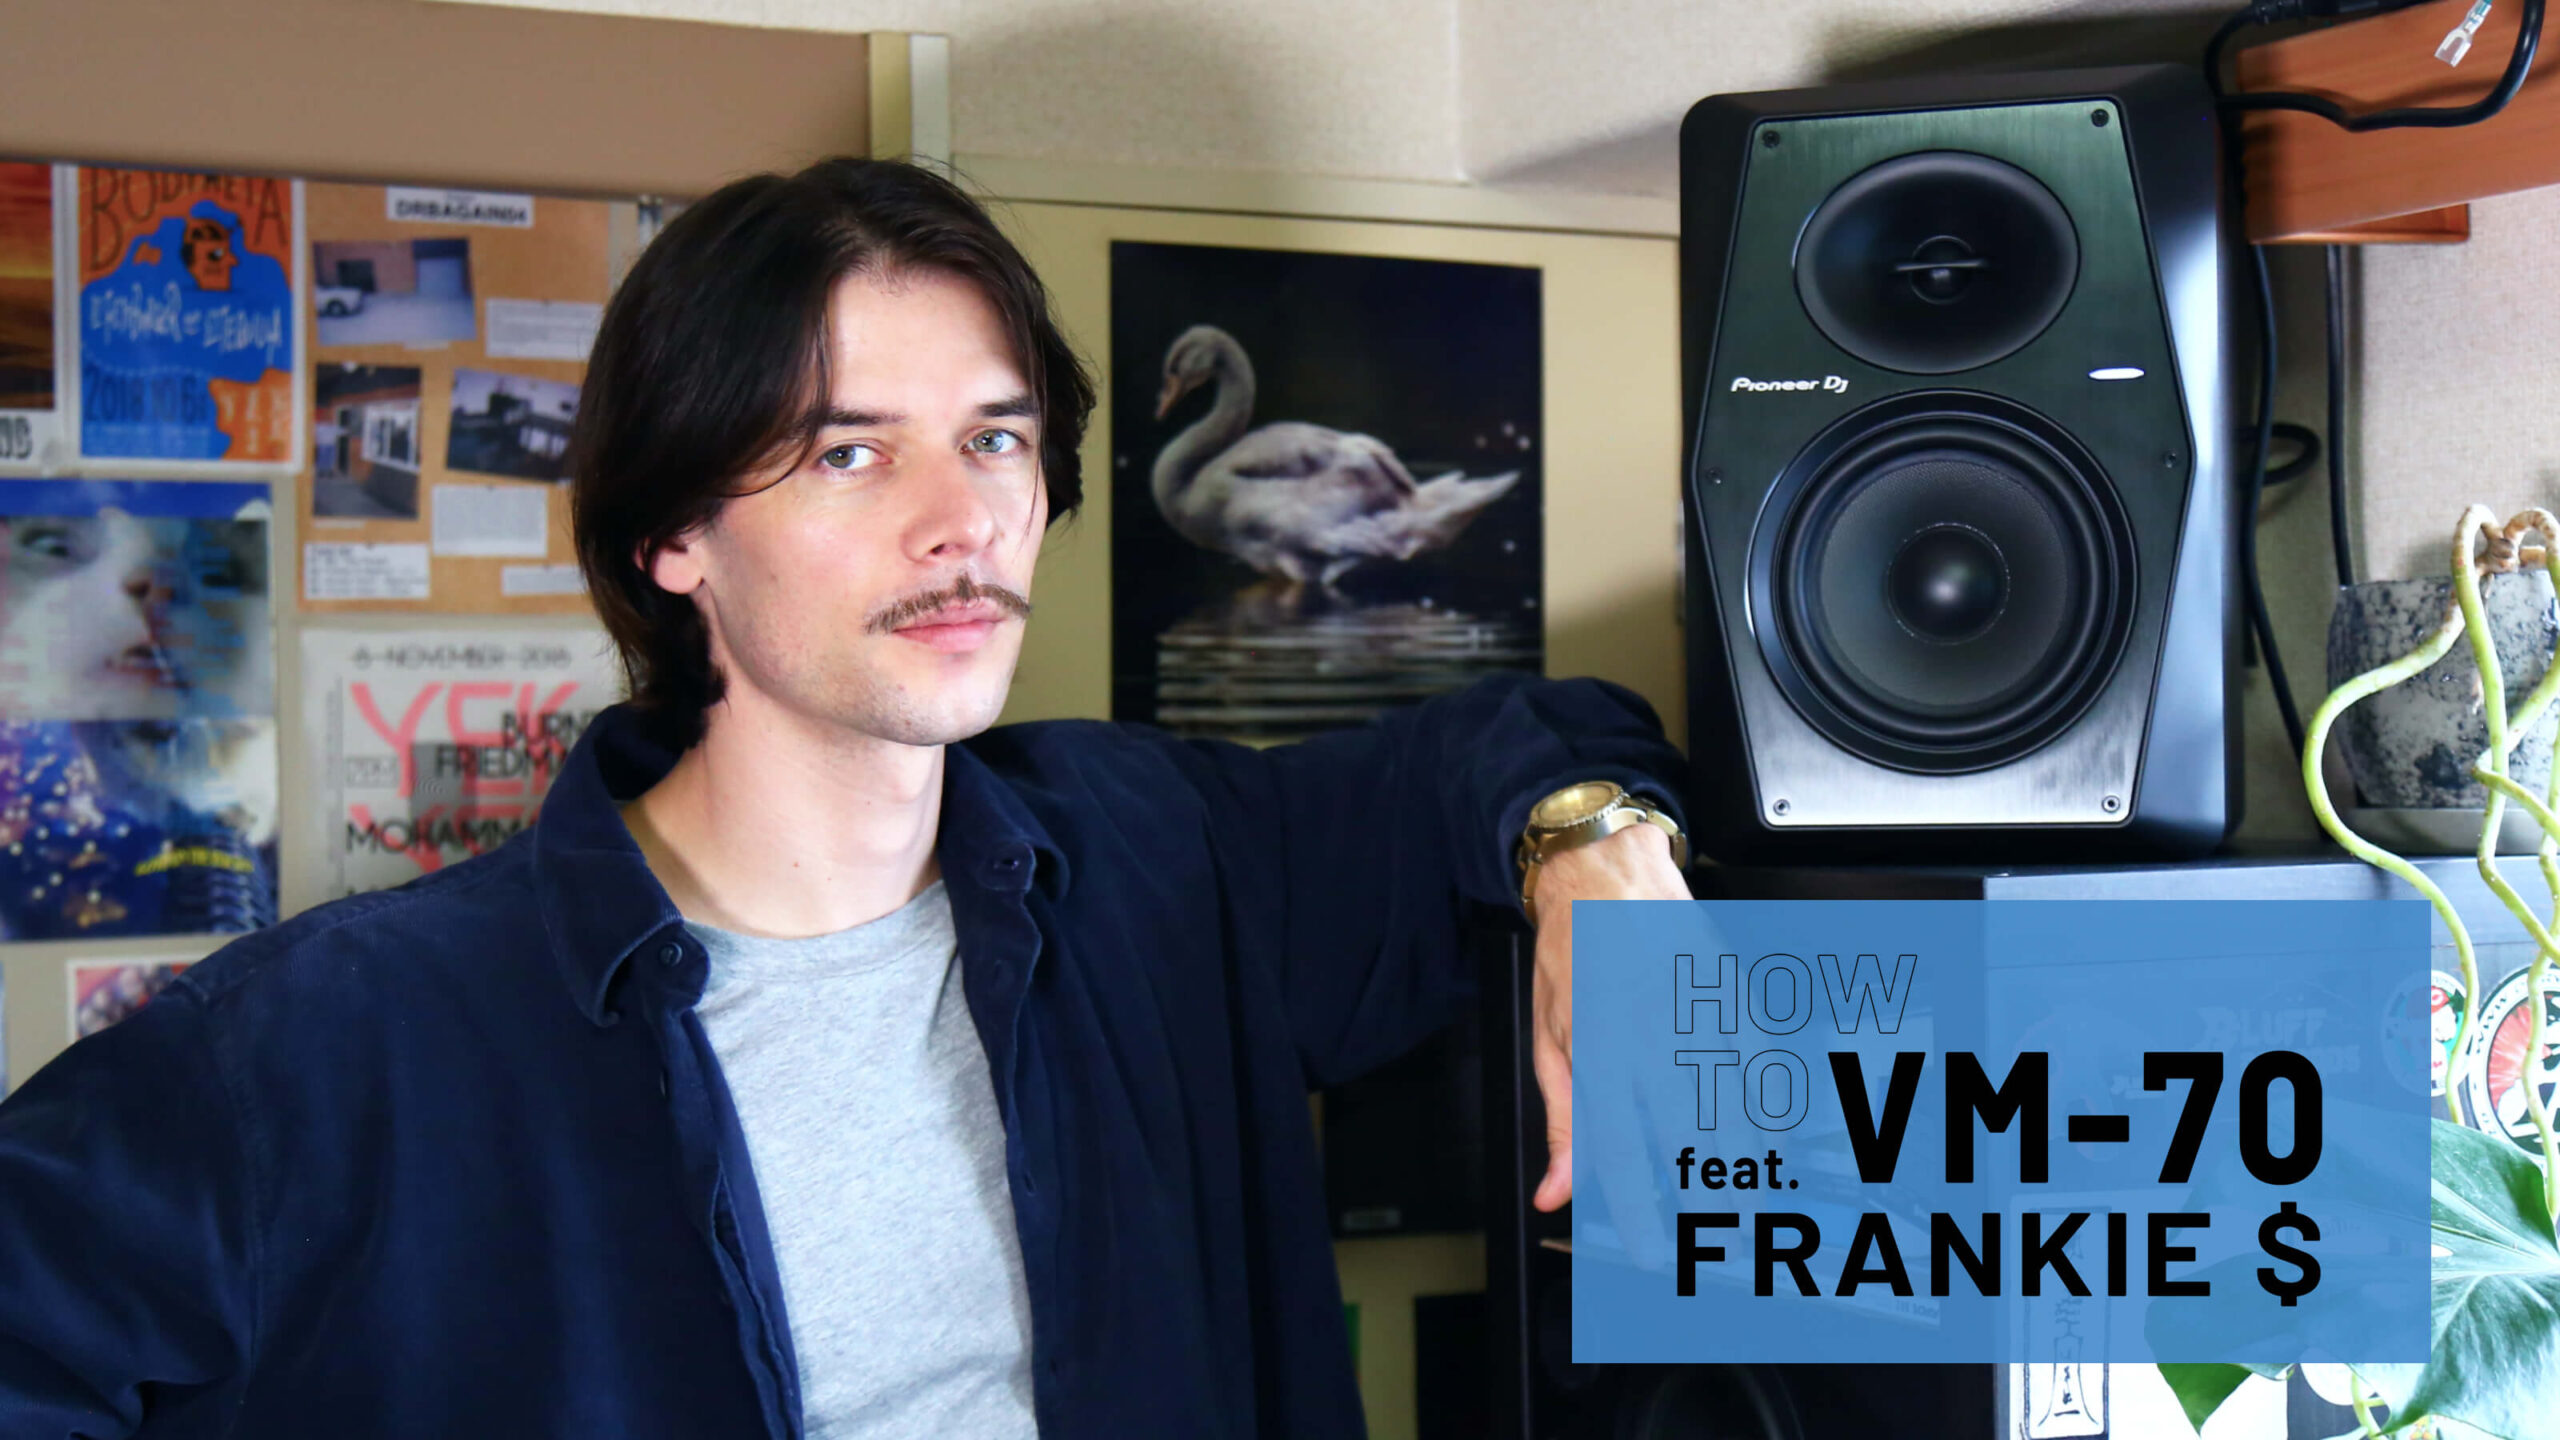 Frankie $ Pioneer DJ VM-70